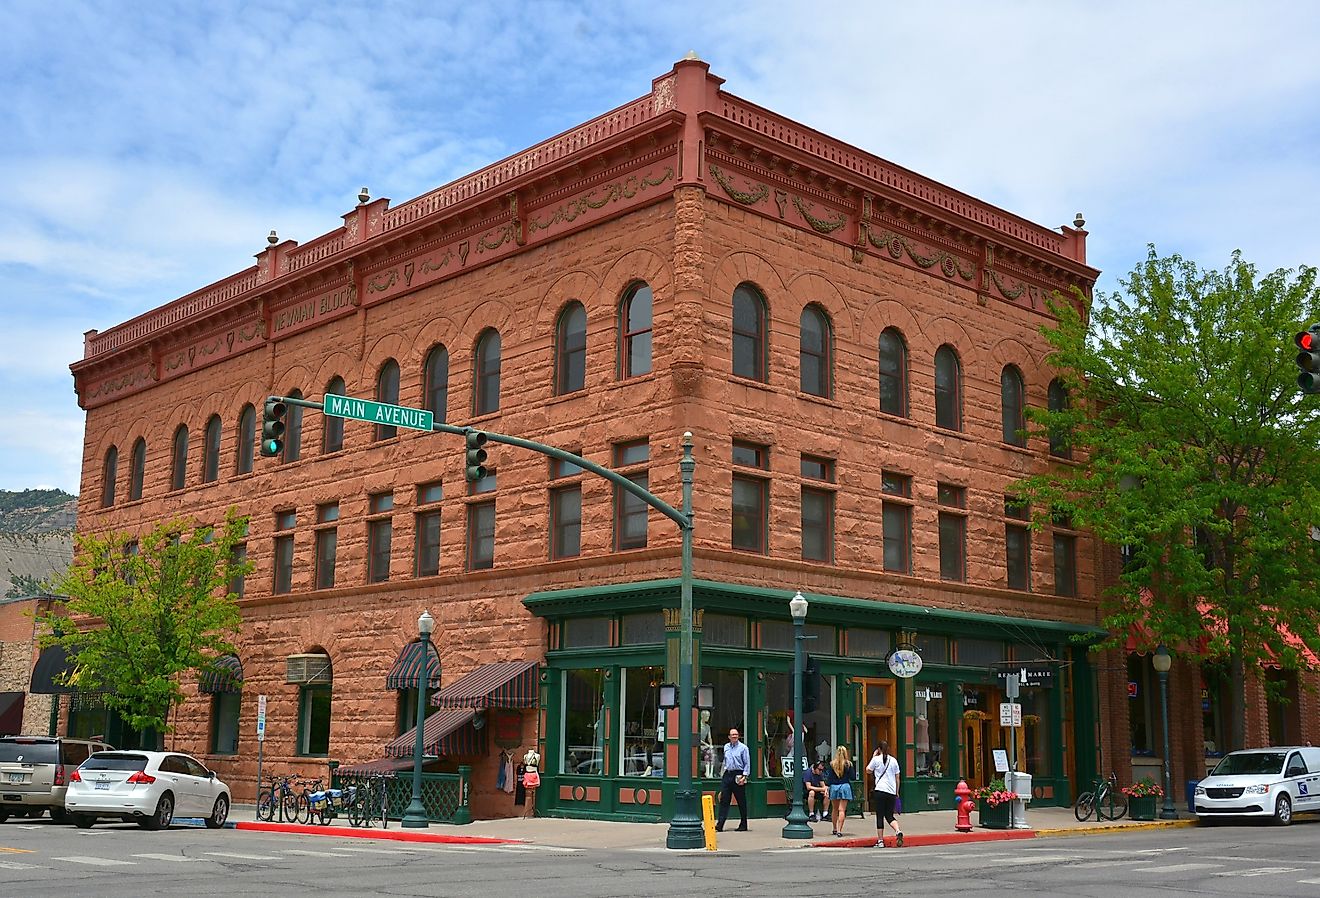 Historic downtown in Durango, Colorado. Image credit Alizada Studios via Shutterstock